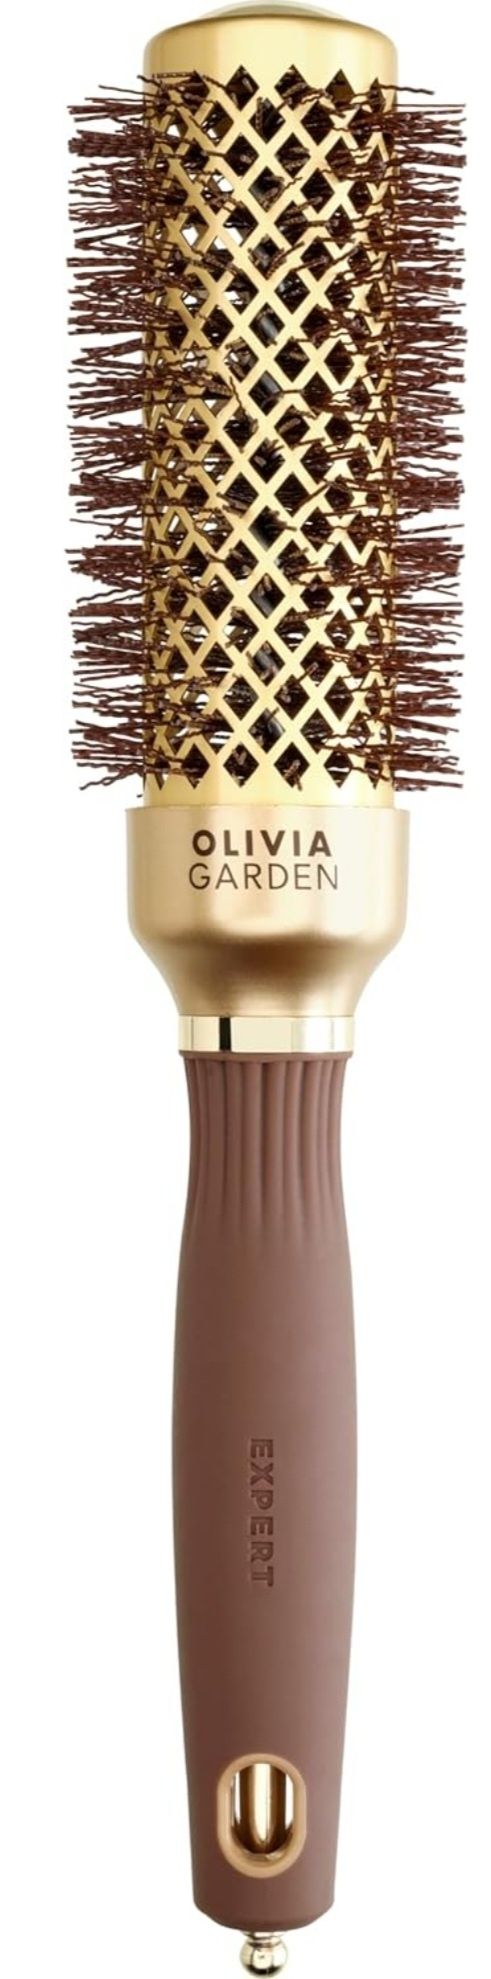 Olivia Garden - Expert Blowout Shine Gold & Brown Hairbrush - 35